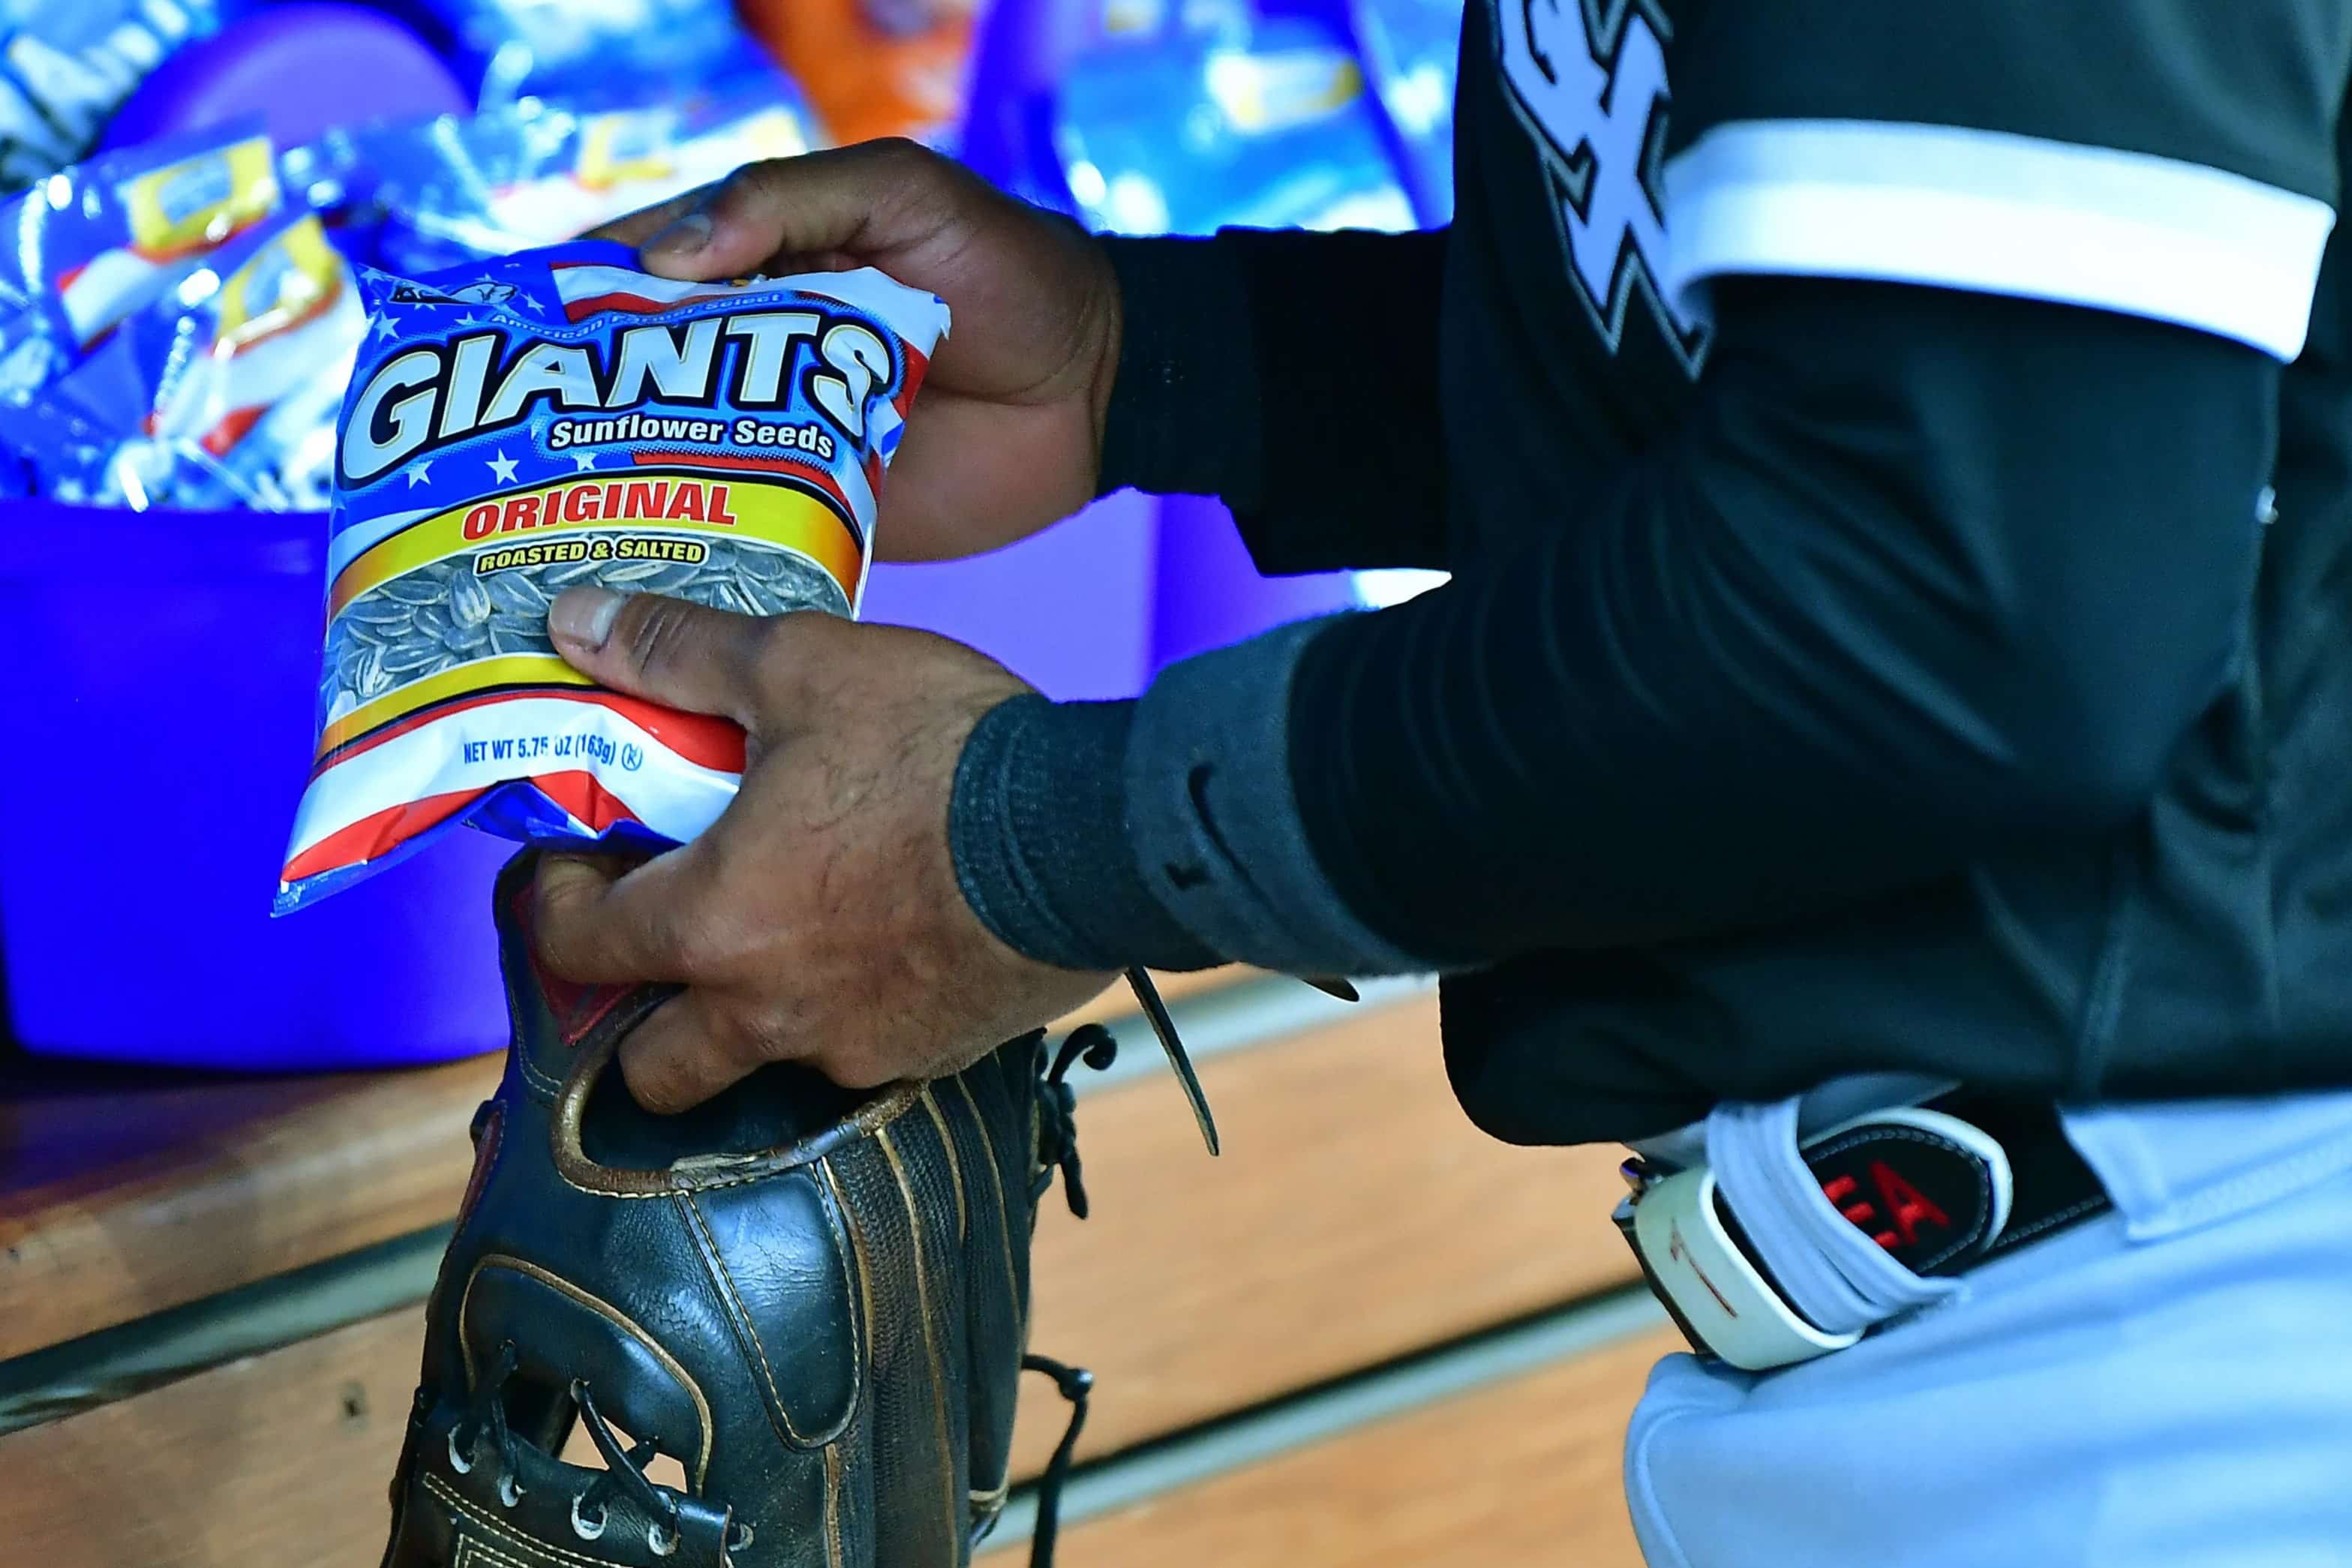 Why Do Baseball Players Eat Seeds